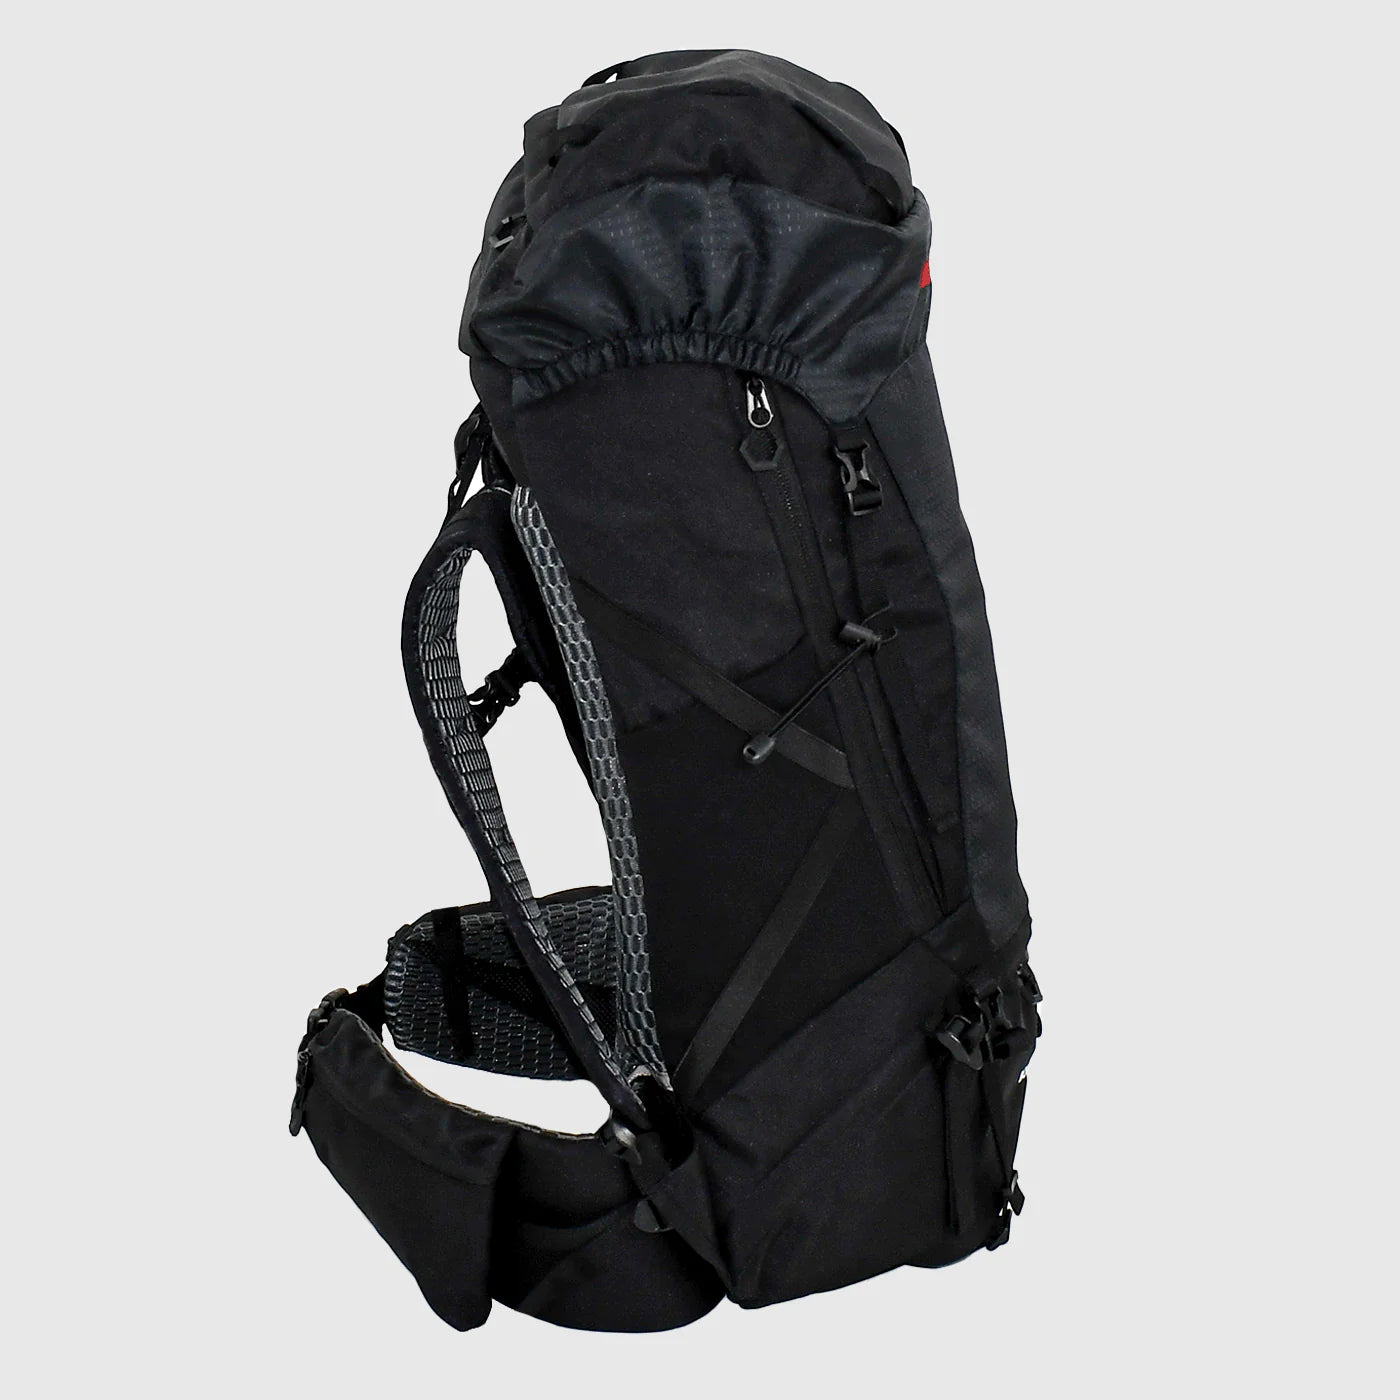 BlackWolf Nankeen Backpack - 60 Litres